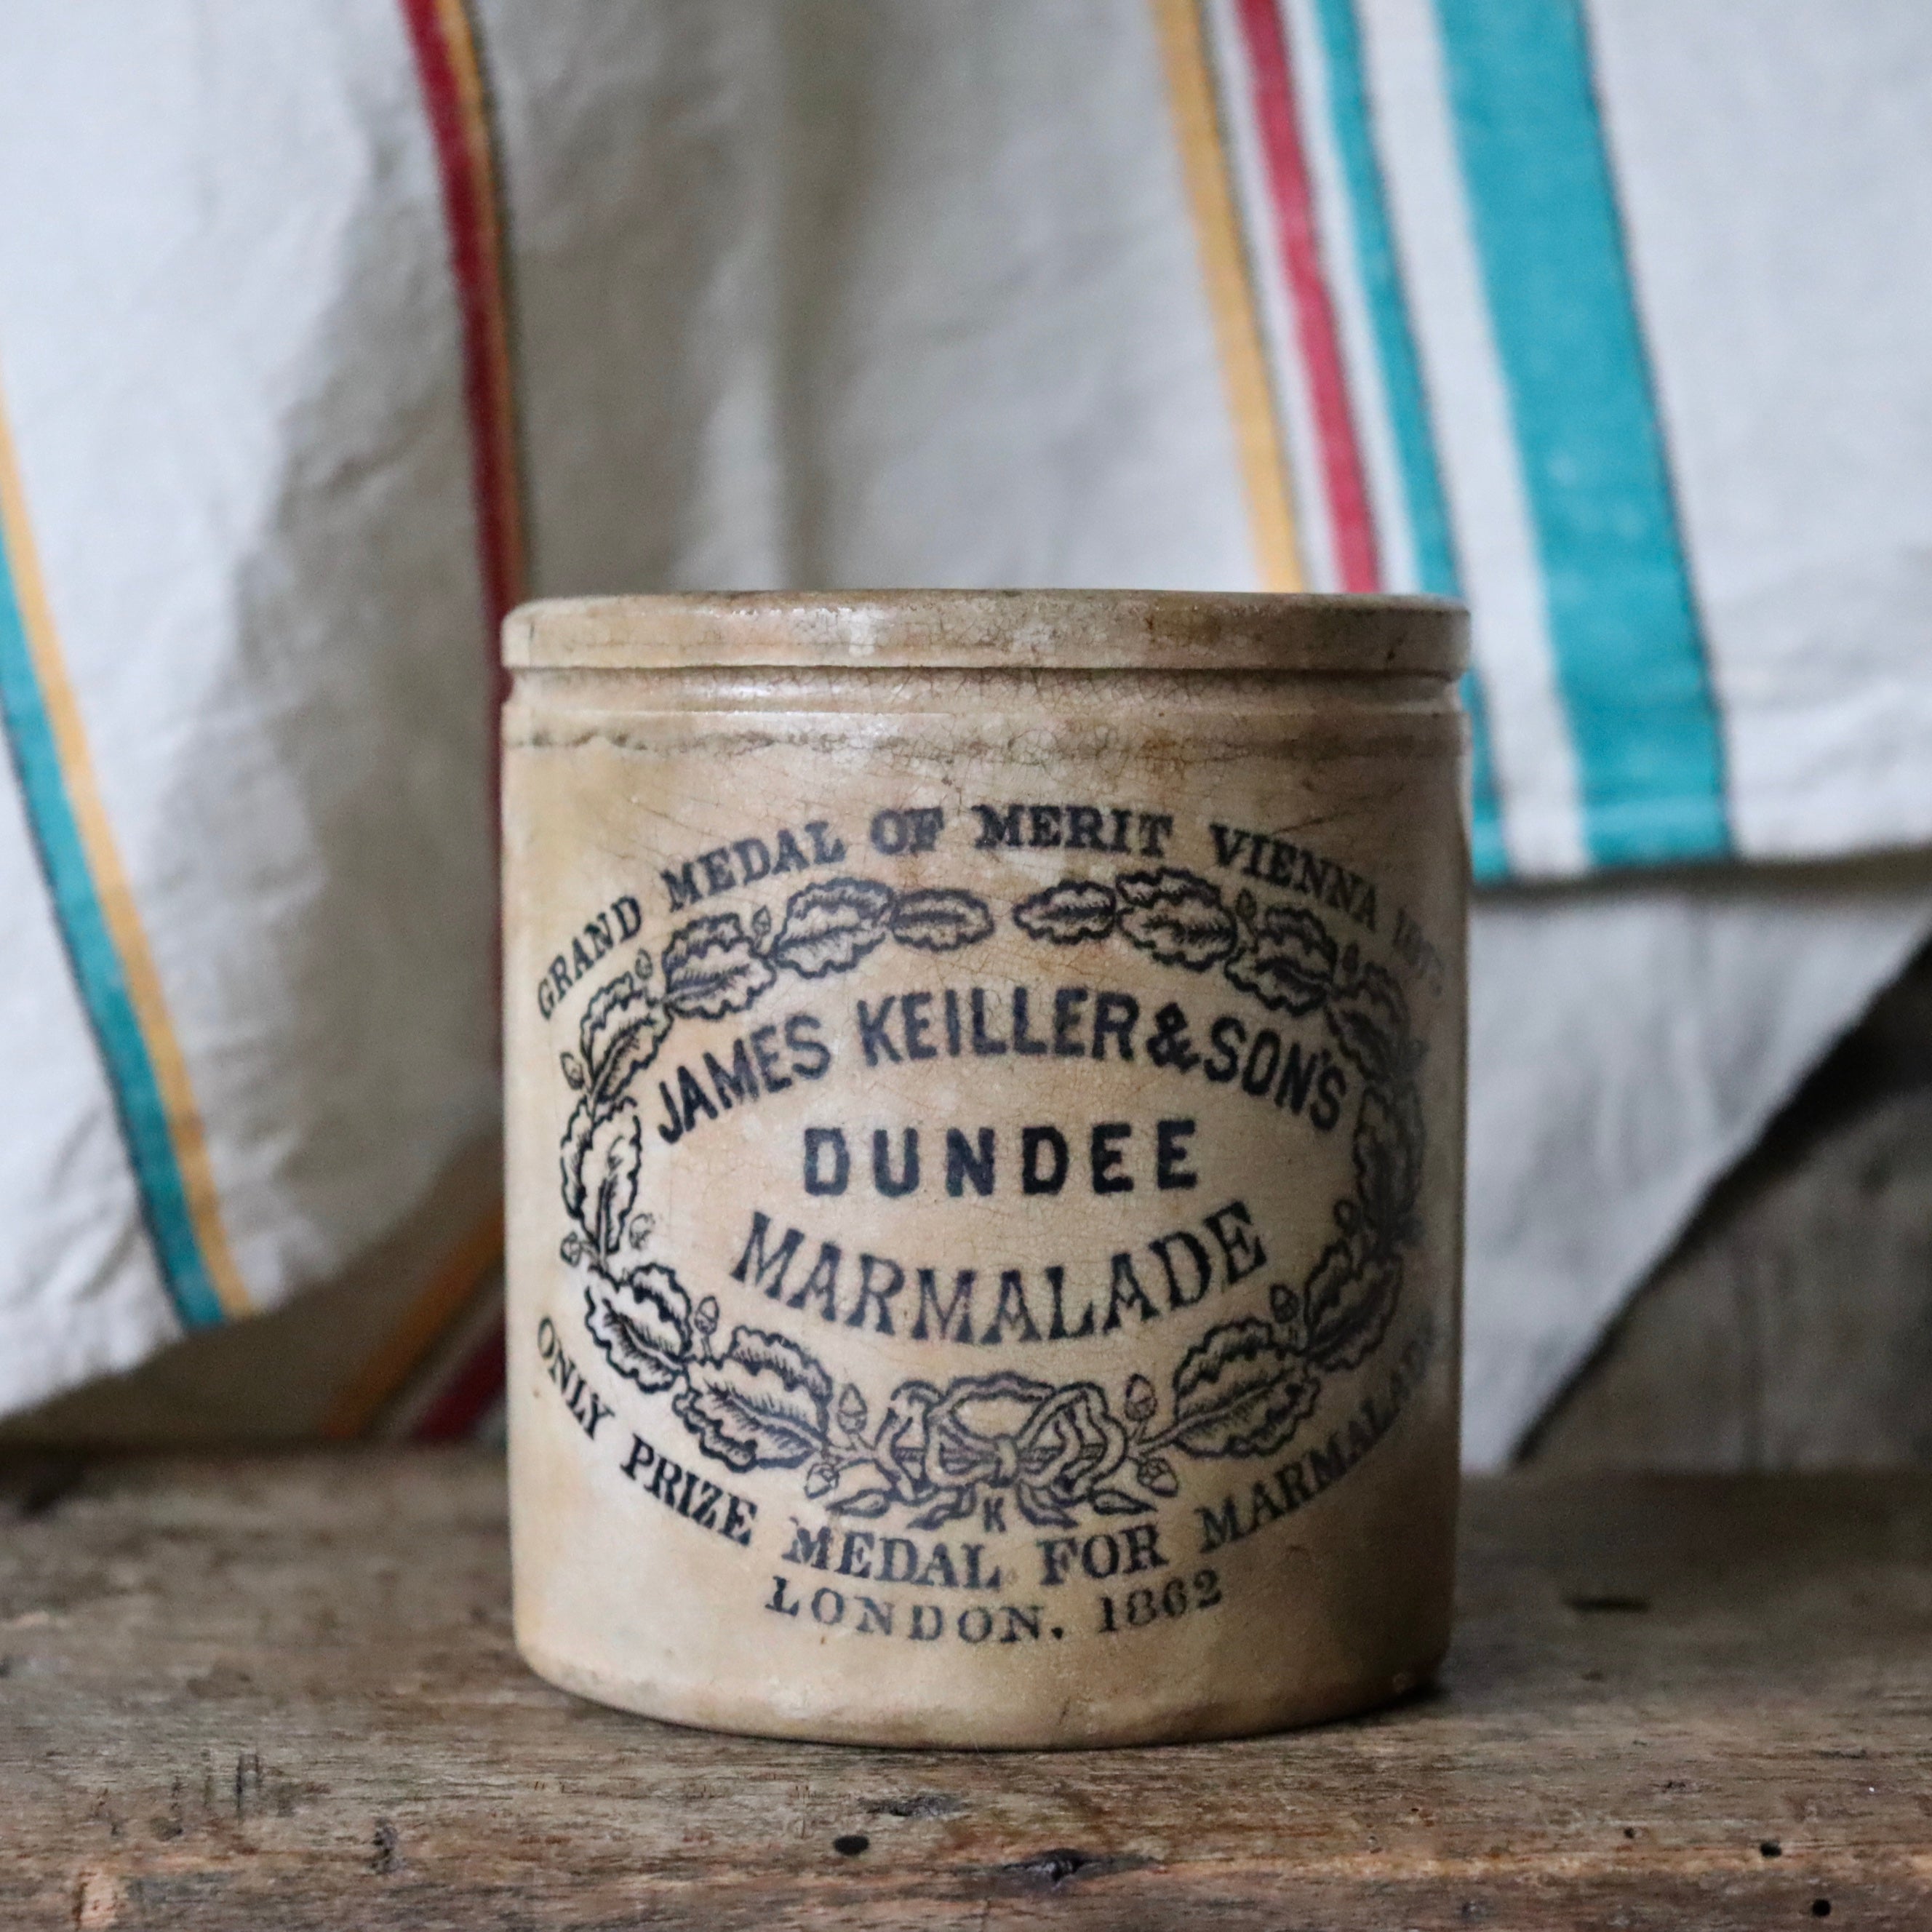 James Keiller & Son's Dundee 1lb Marmalade Pot